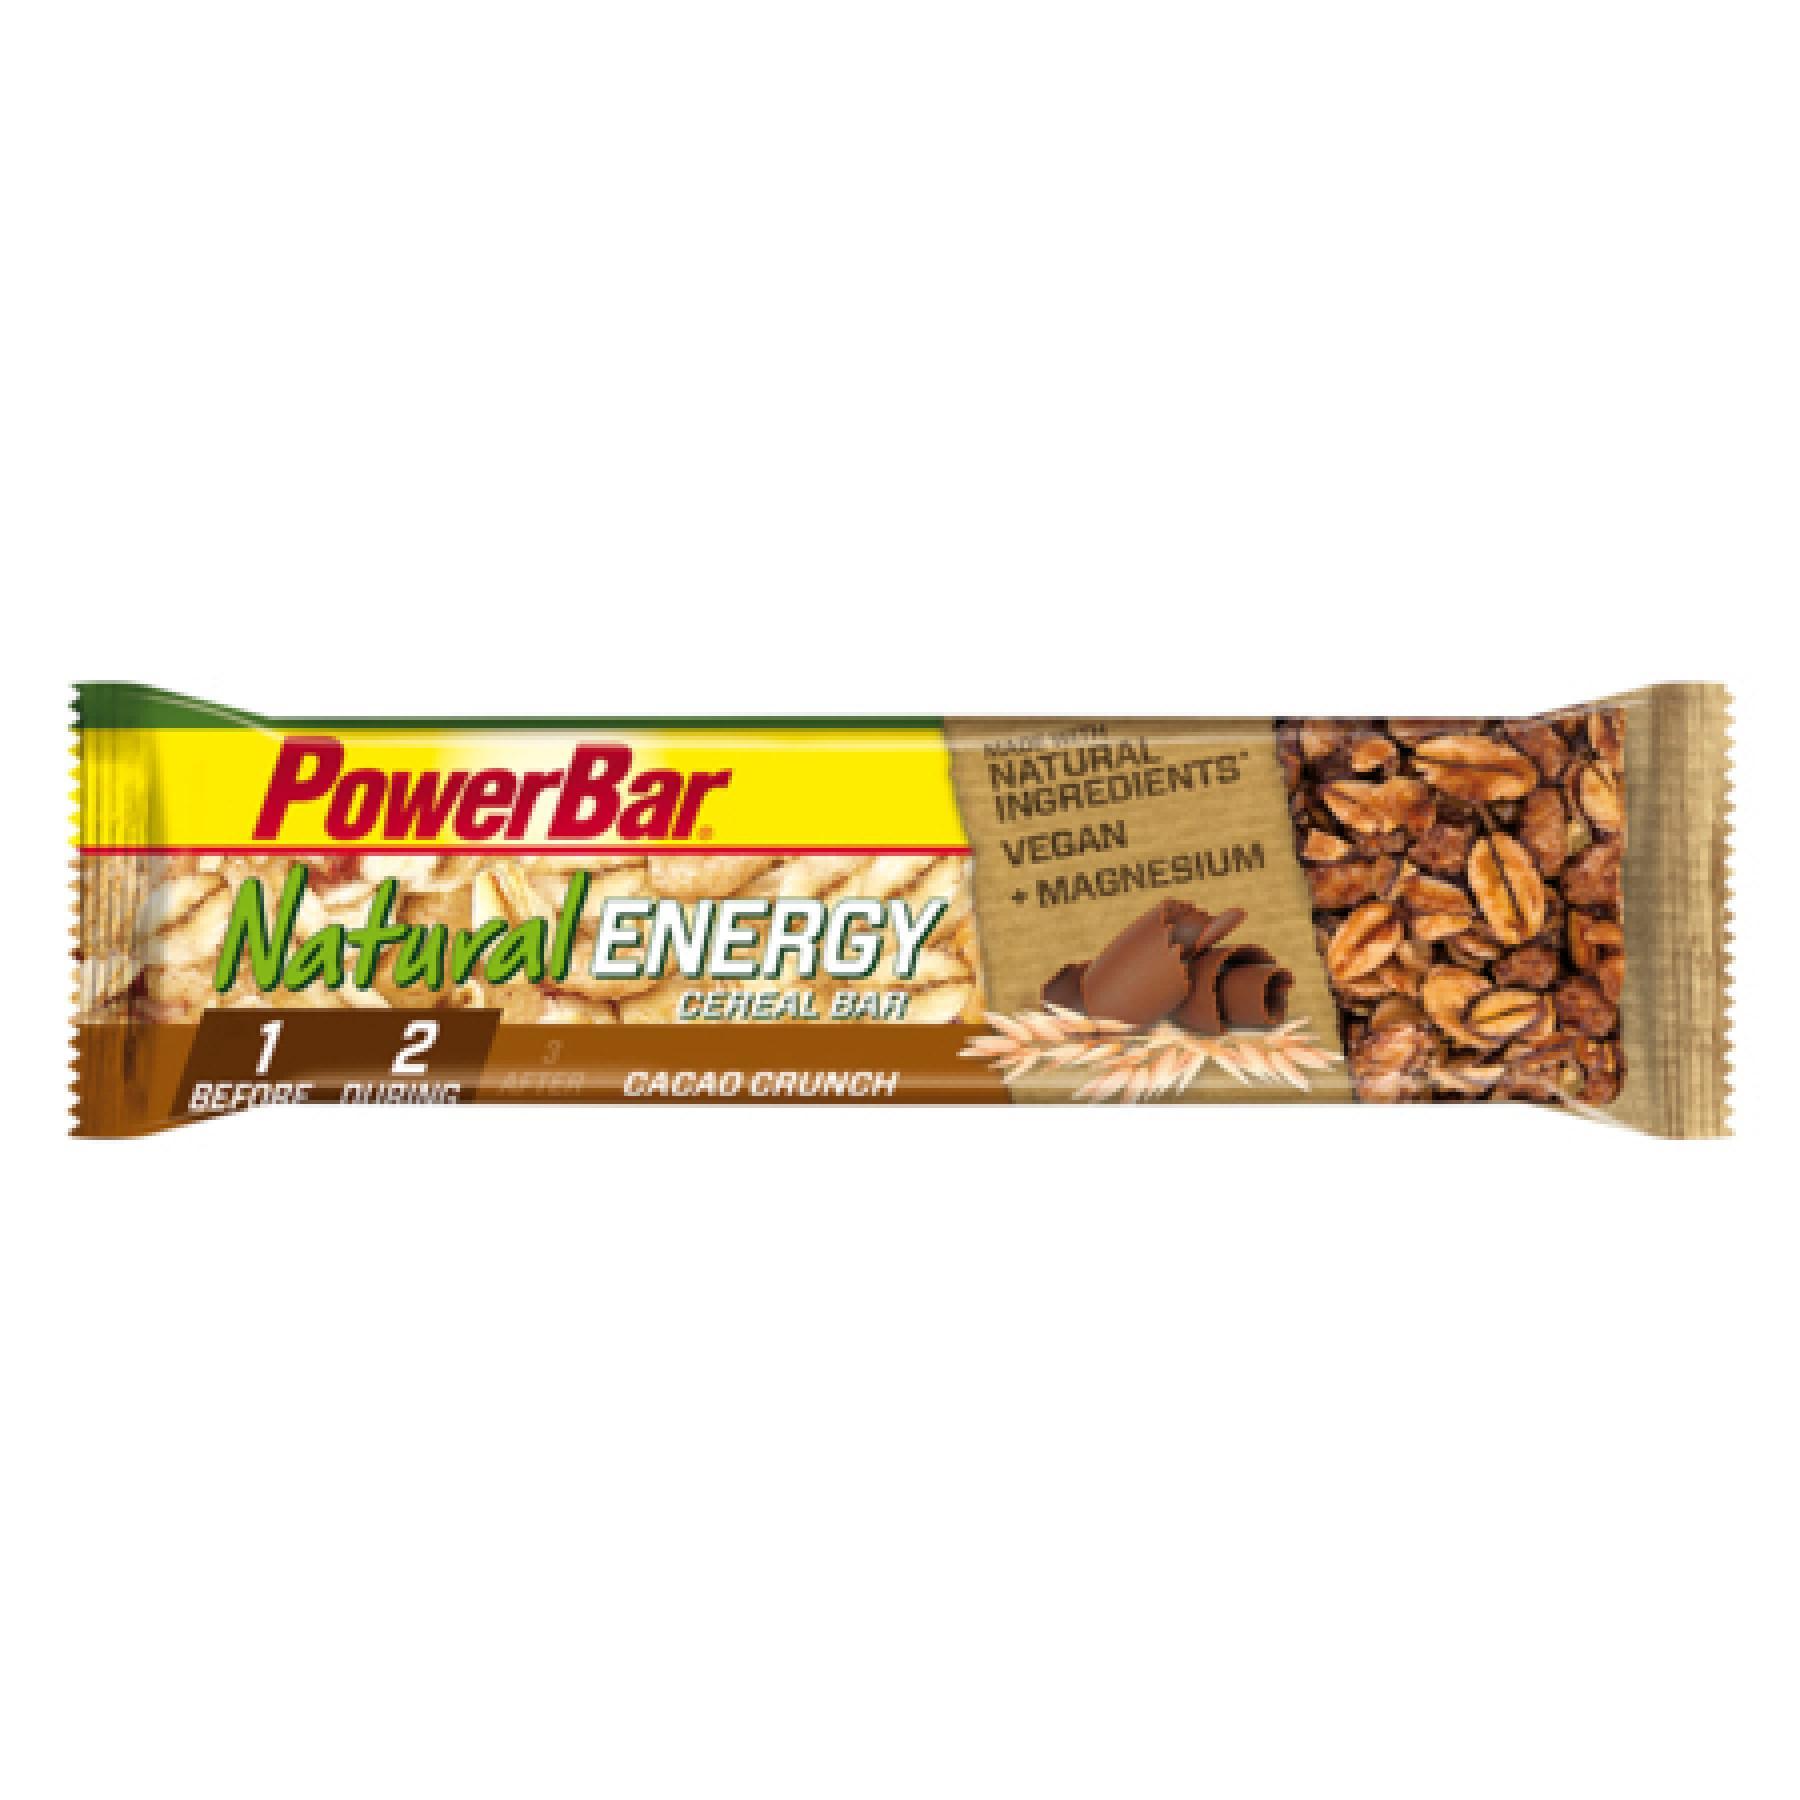 Partia 24 sztabek PowerBar Natural Energy Cereals - Cacao Crunch